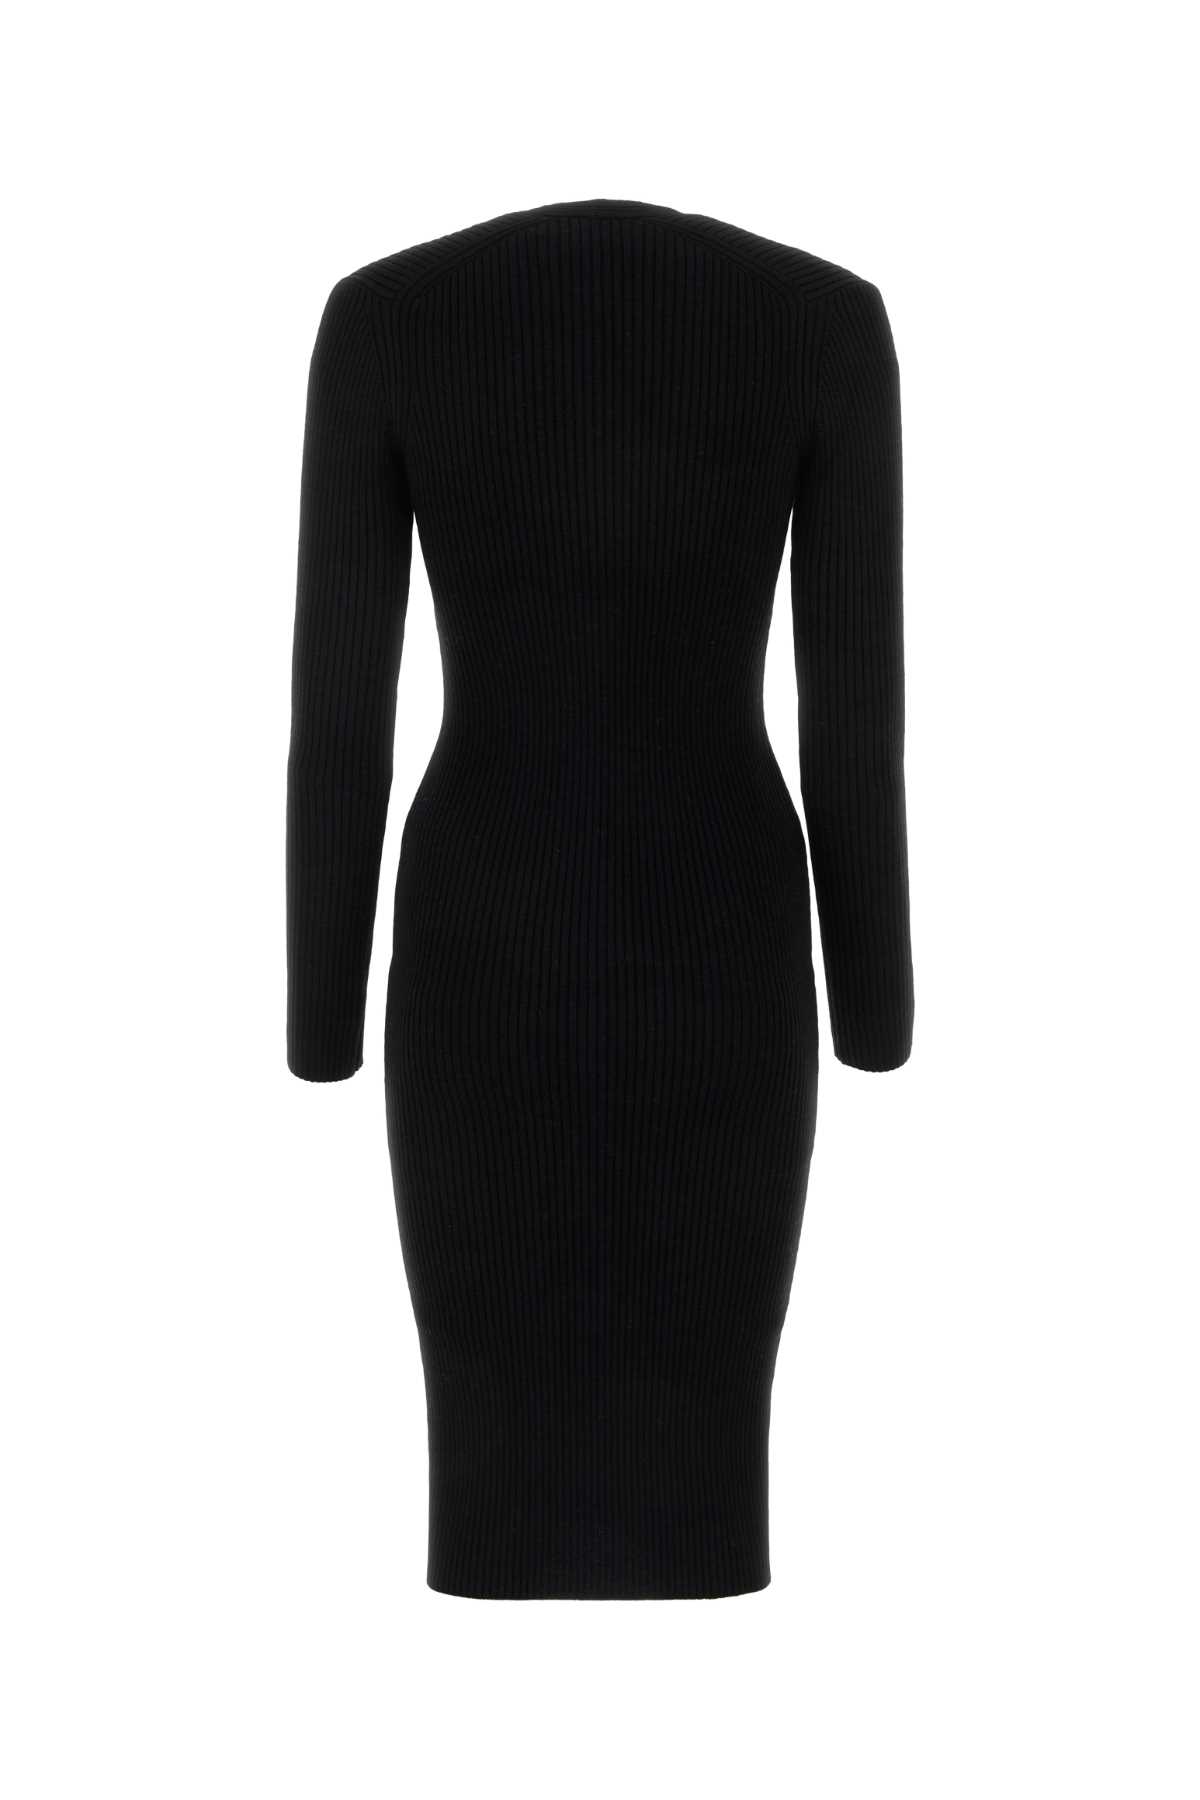 Isabel Marant Black Stretch Wool Blend Zael Dress